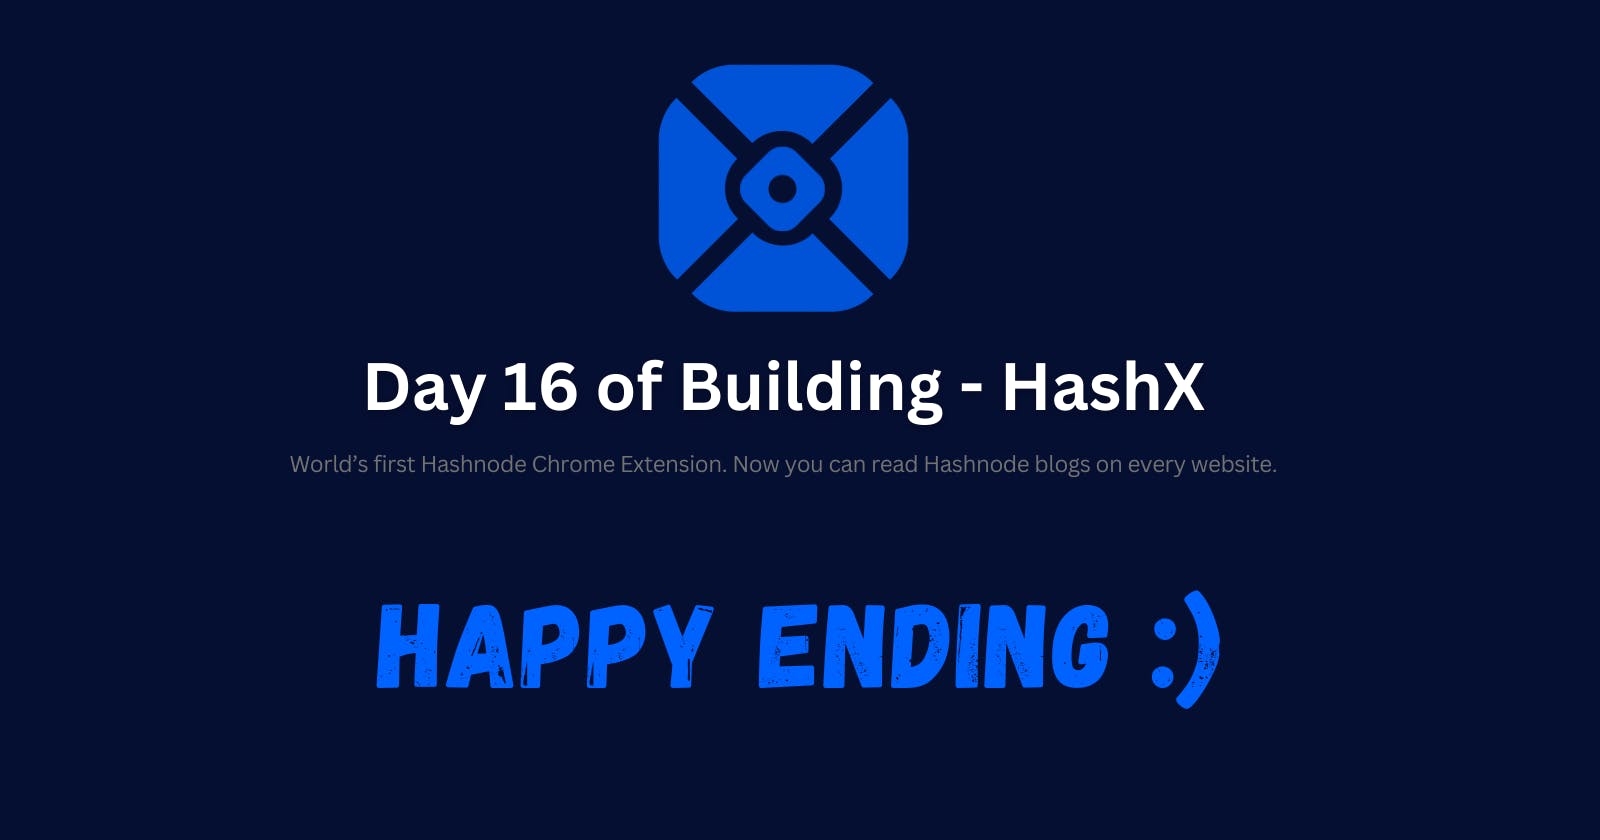 Day 16 - Happy ending :)